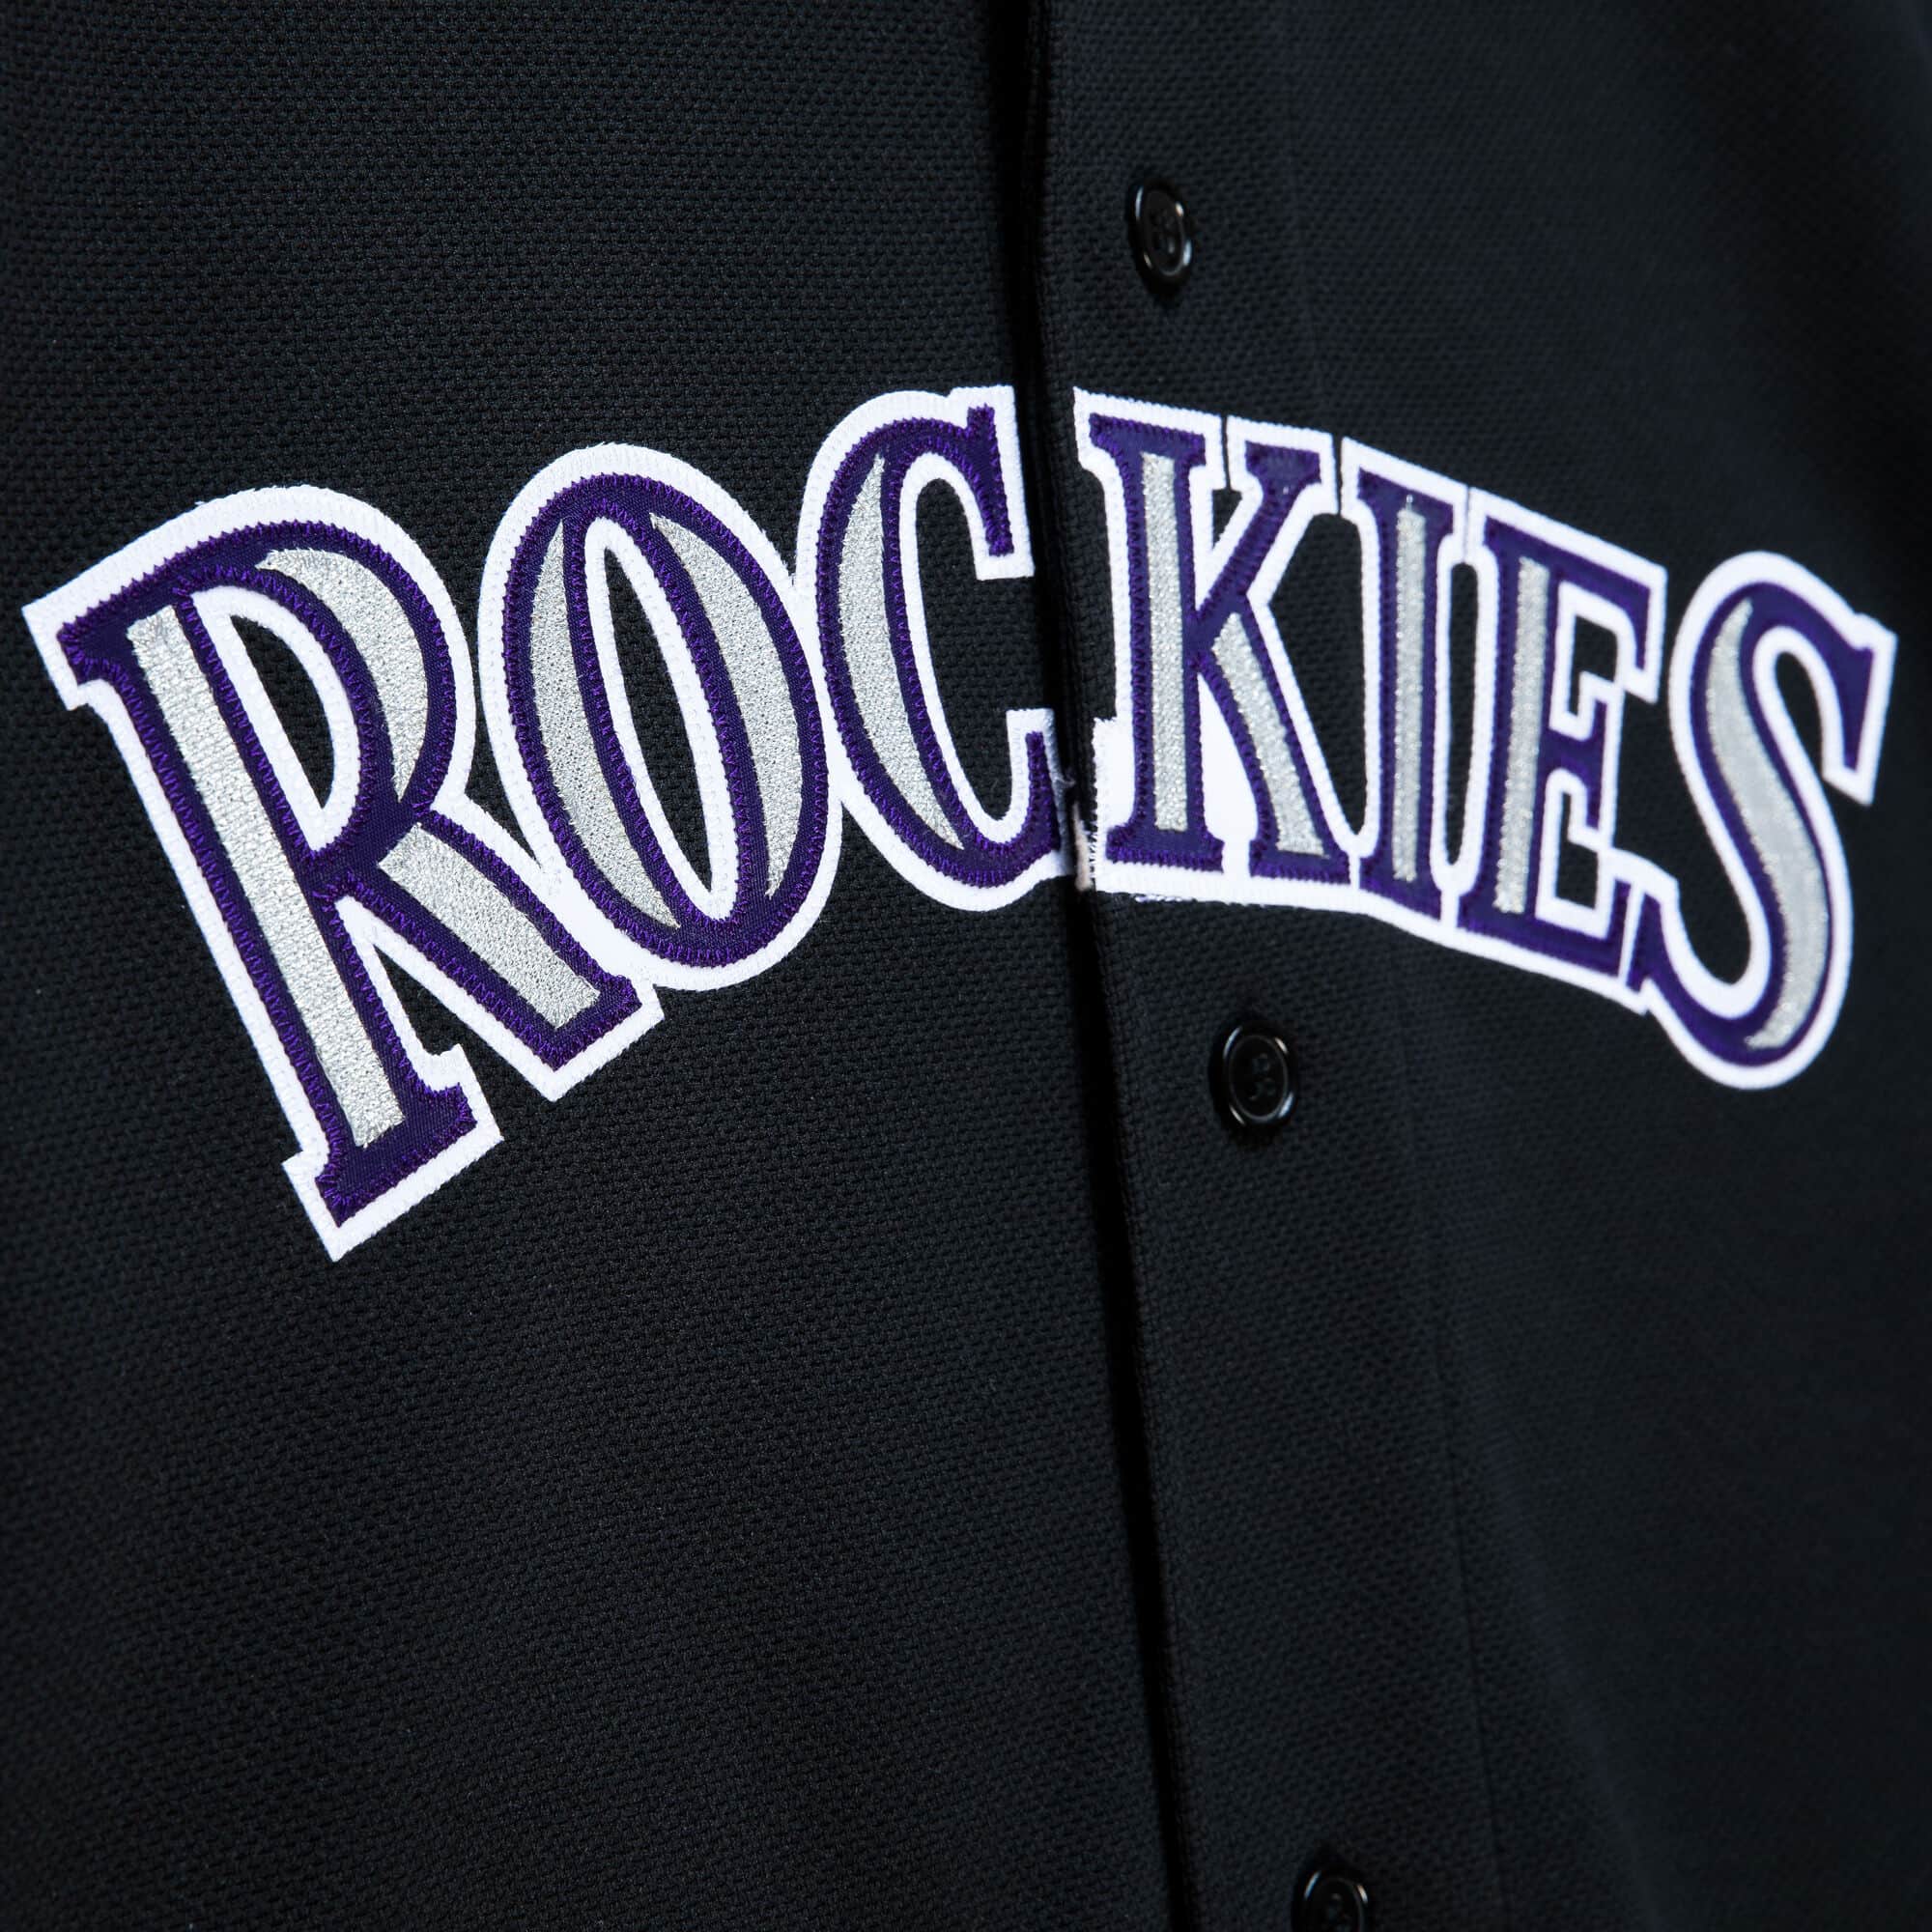 rockies bp jersey